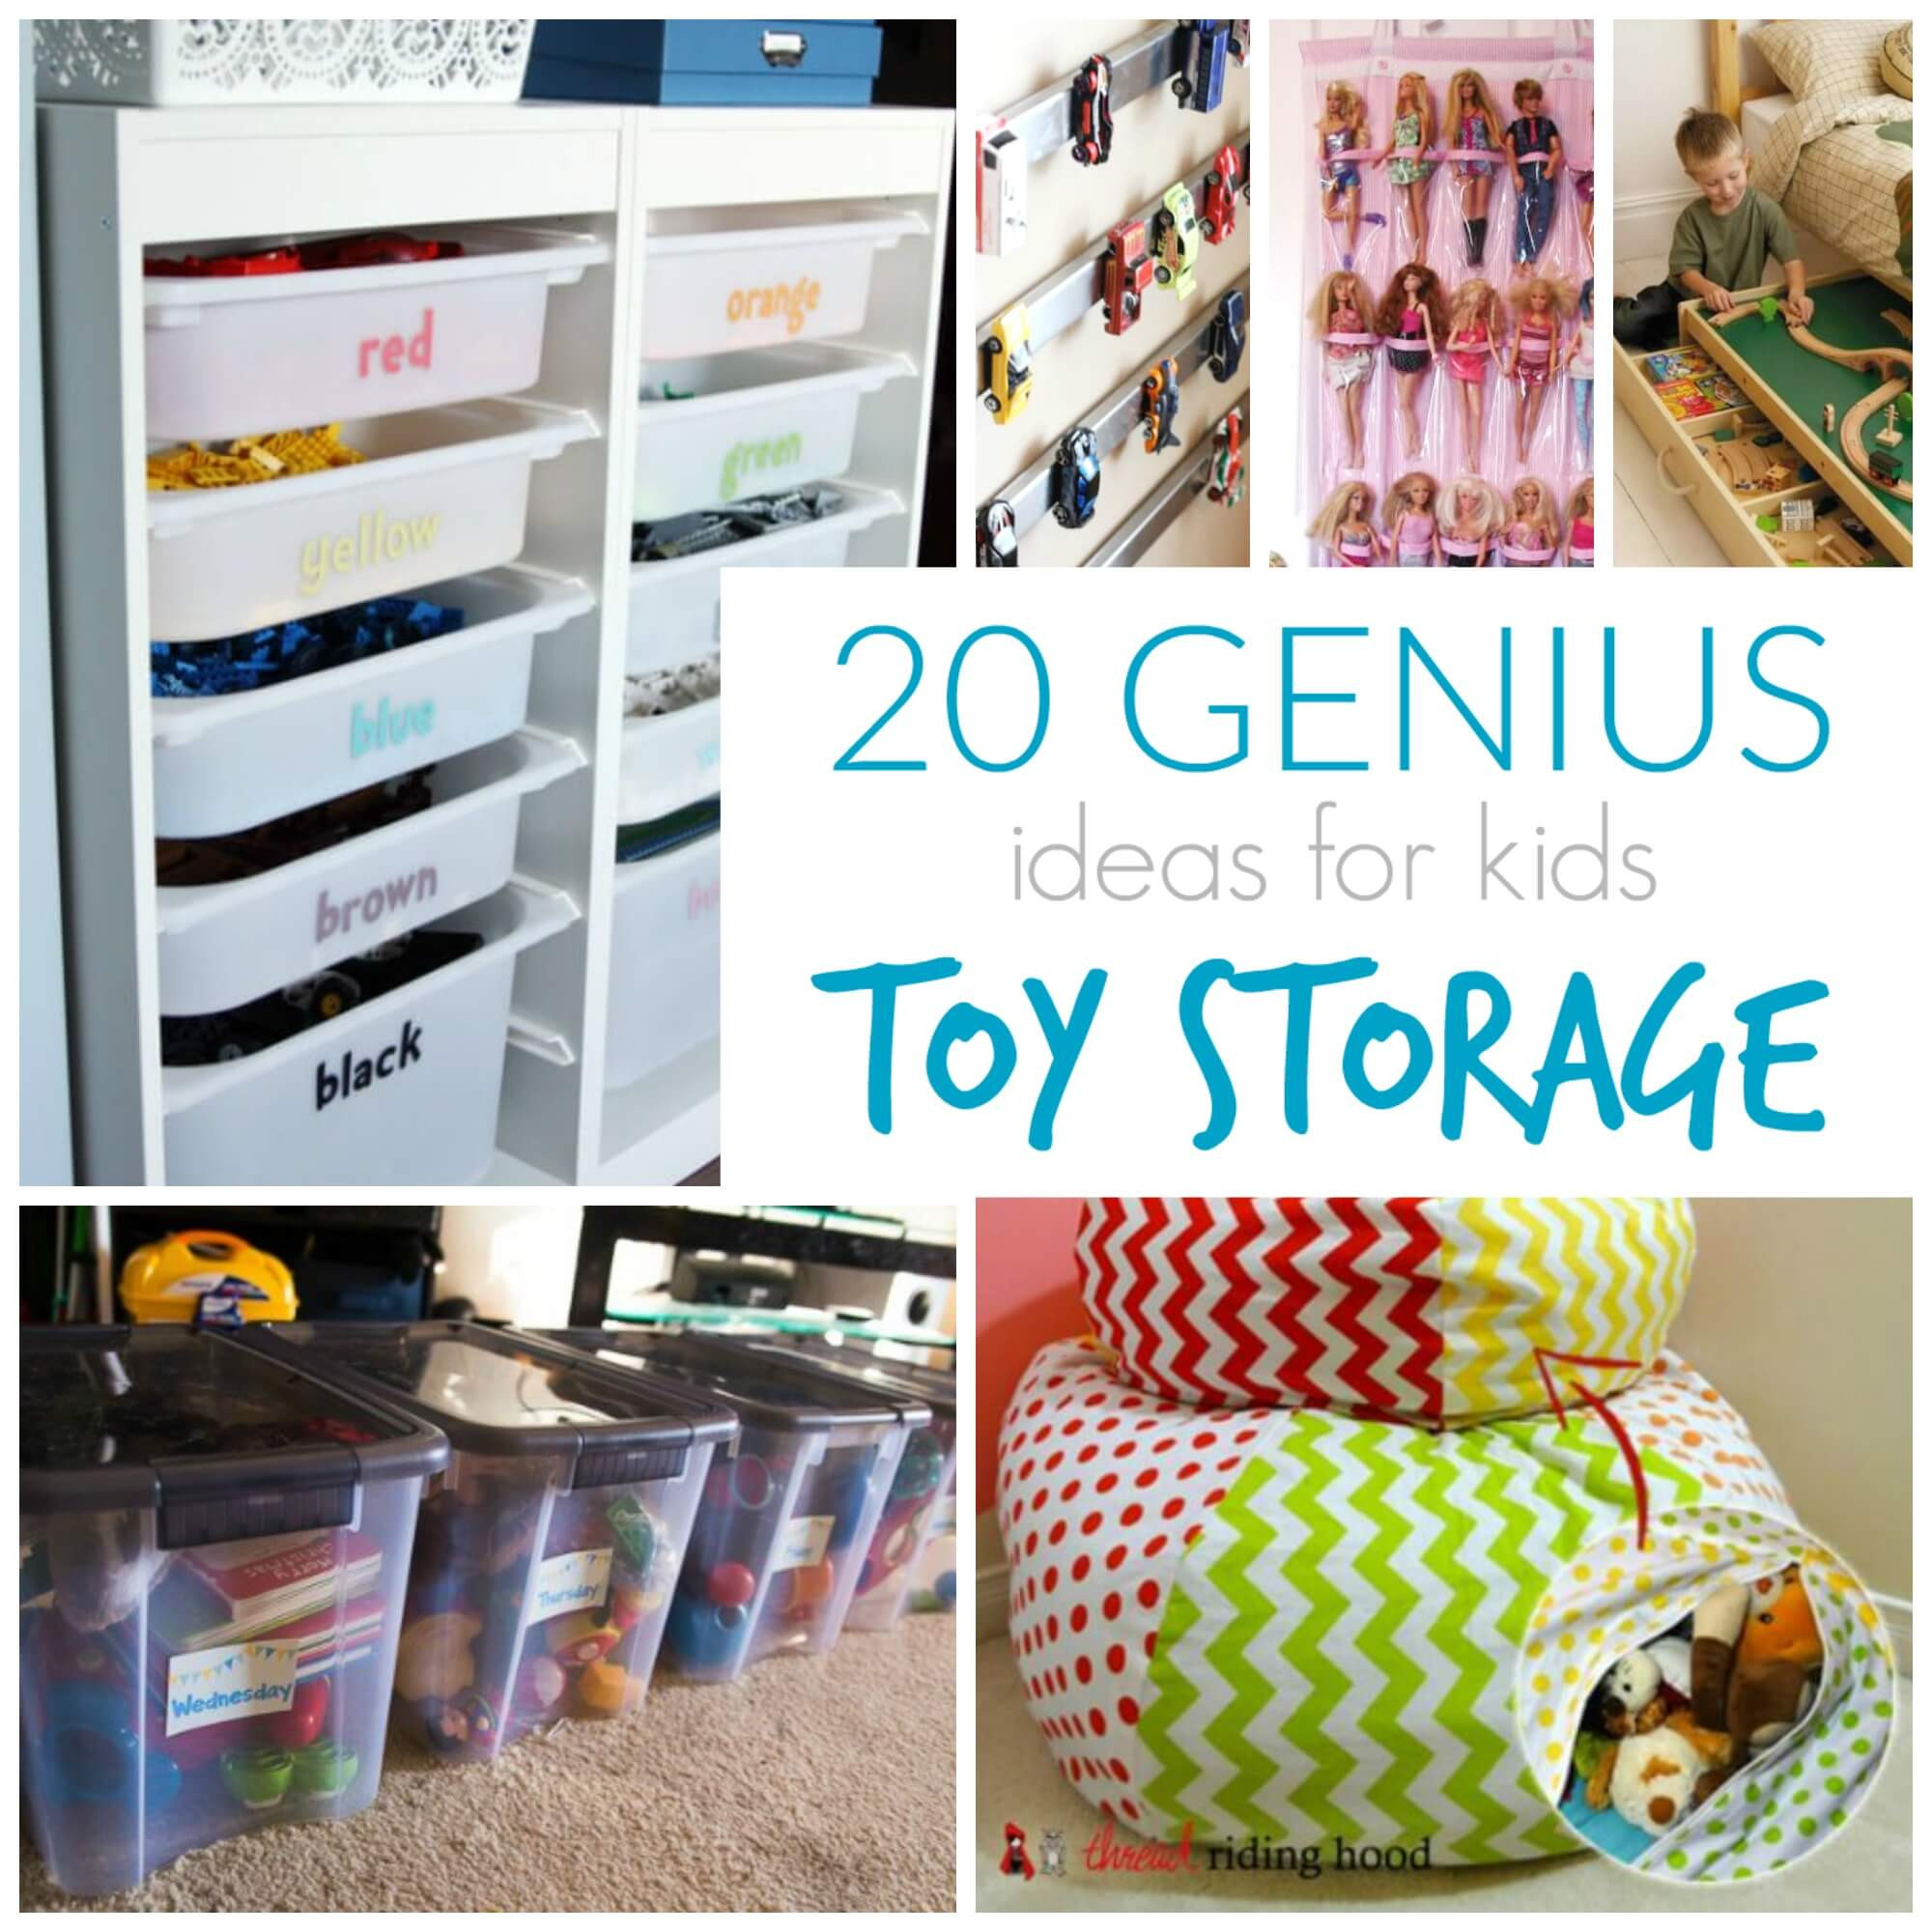 Kids toy Storage Ideas Beautiful 20 Genius toy Storage Ideas for Kids Rooms